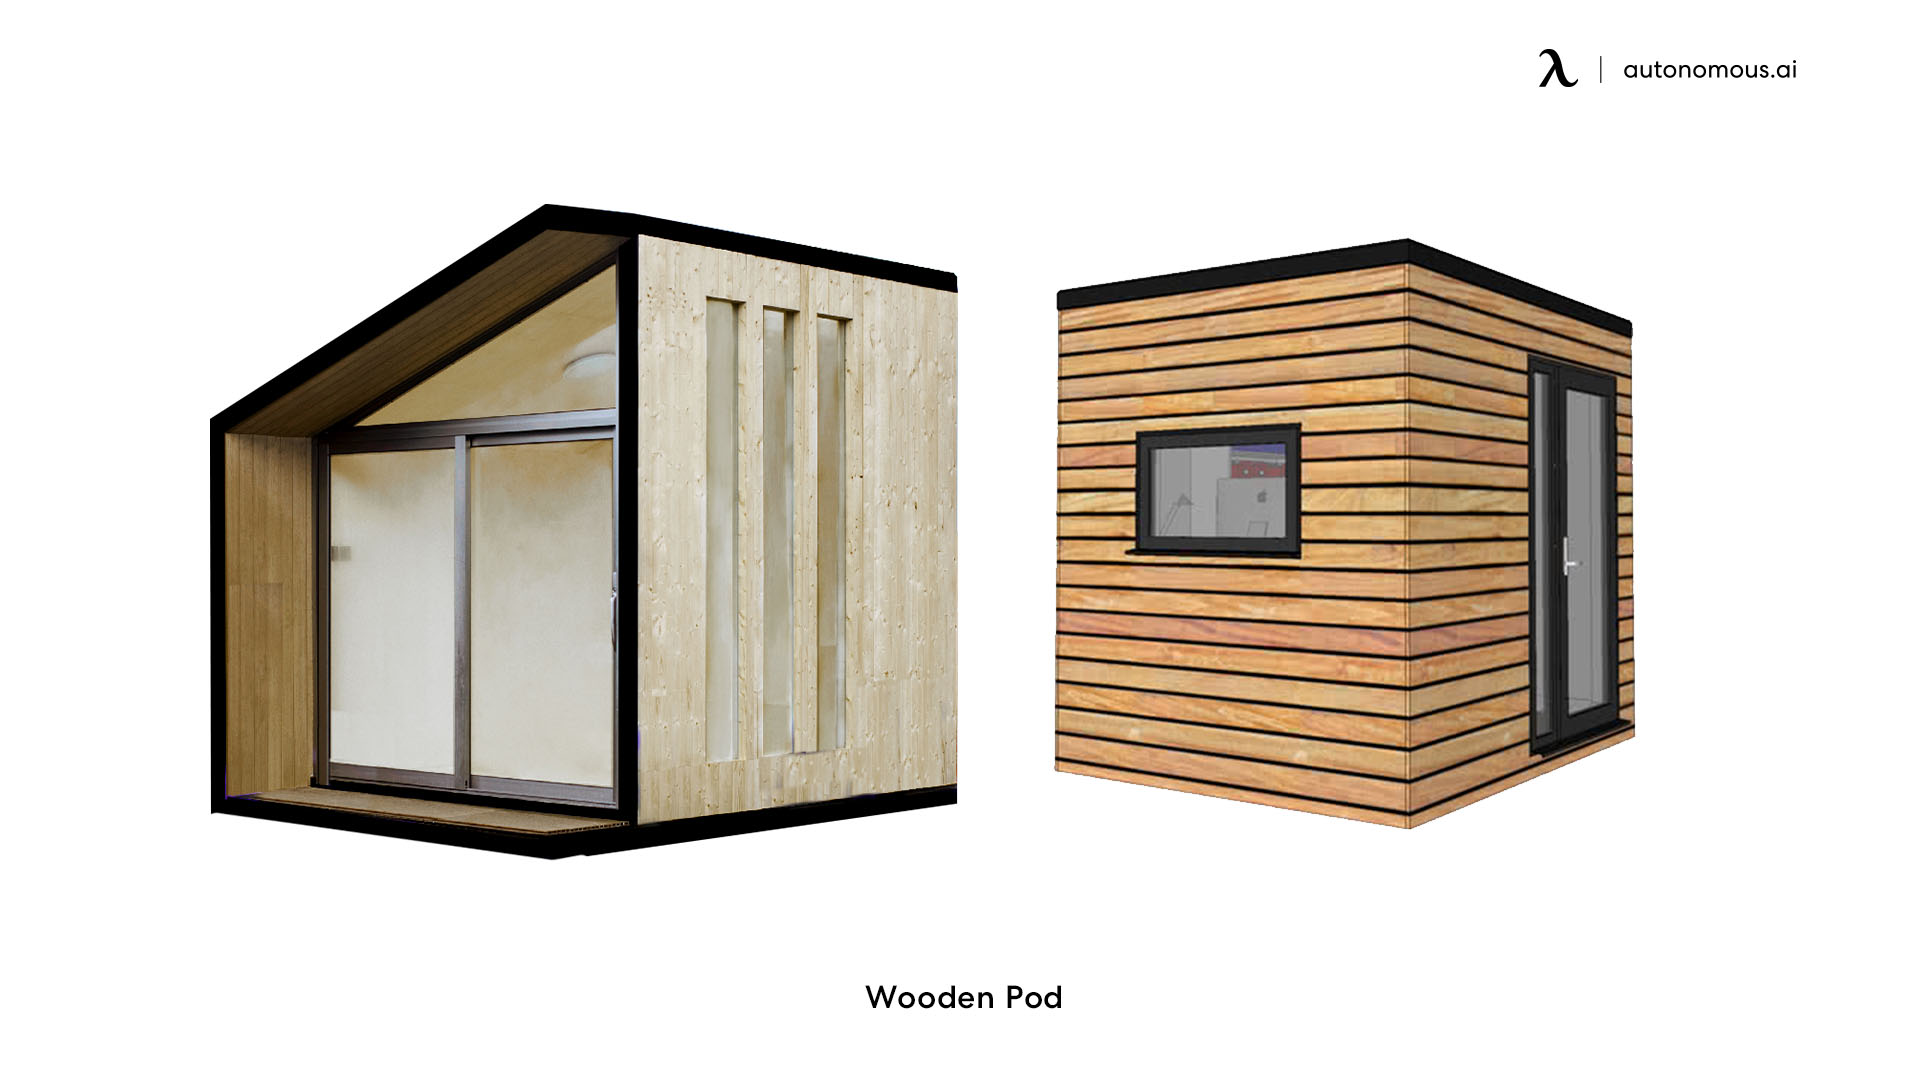 Wooden Pod small garden office